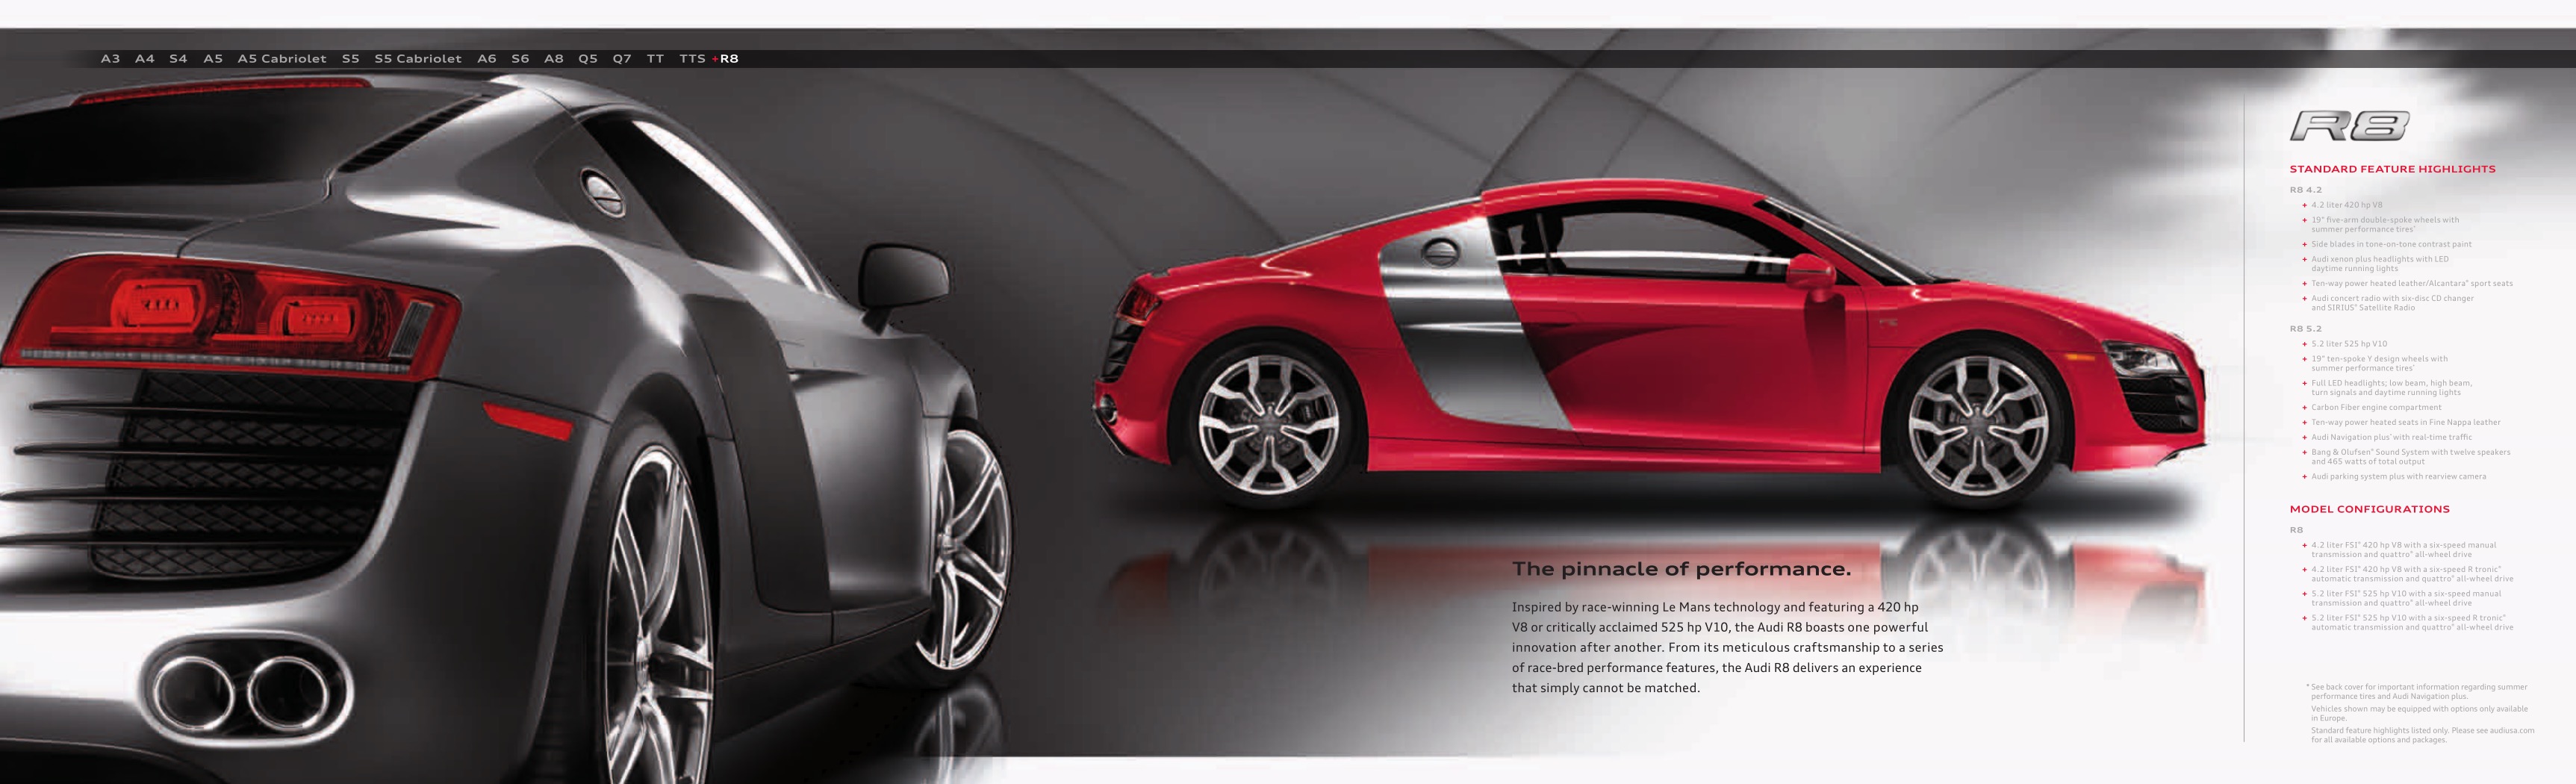 2010 Audi Brochure Page 10